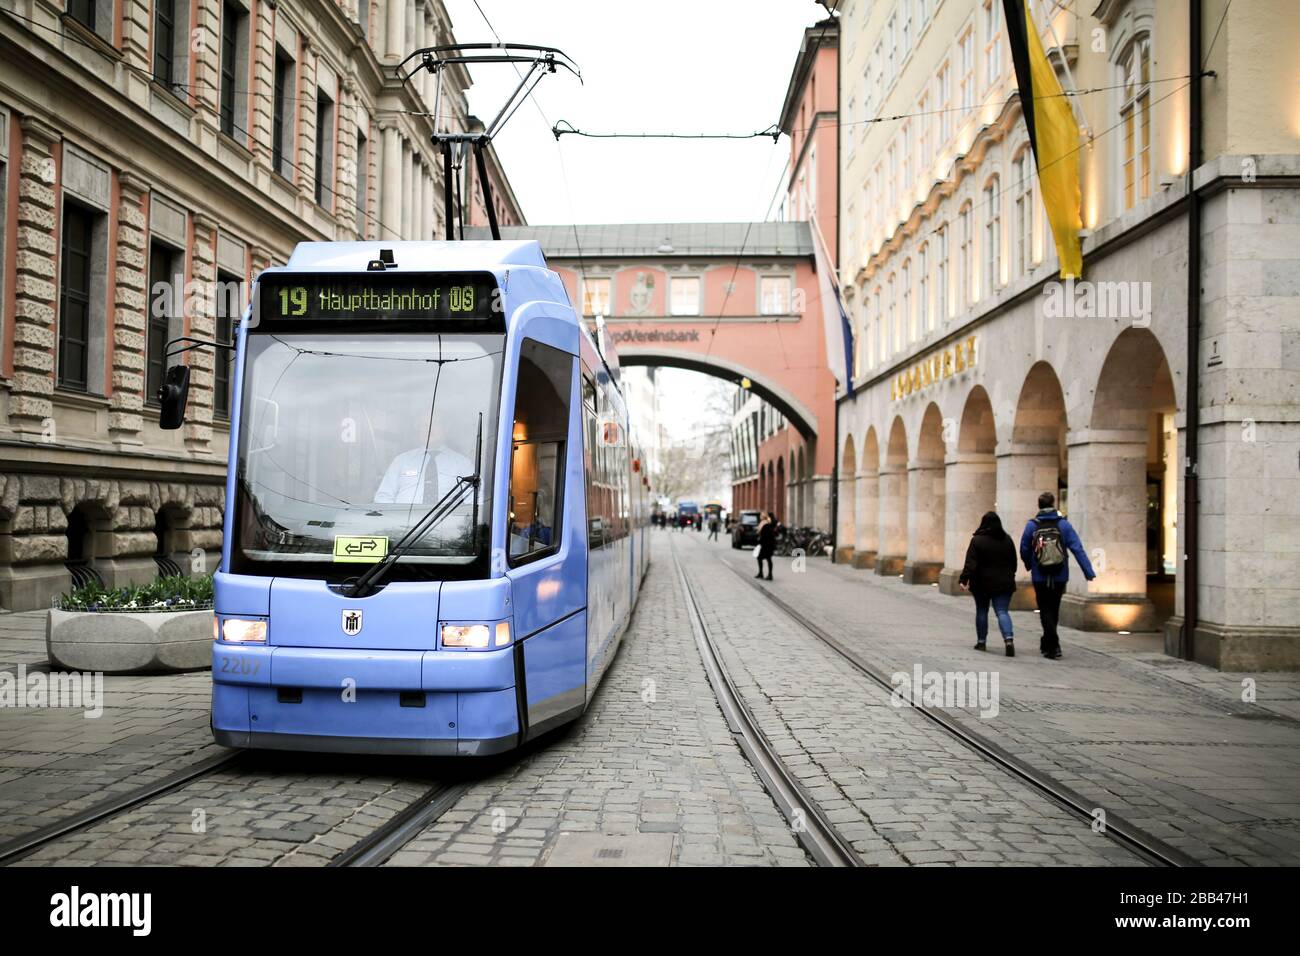 Tram in Munich, Route 19 Hauptbahnhof Stock Photo